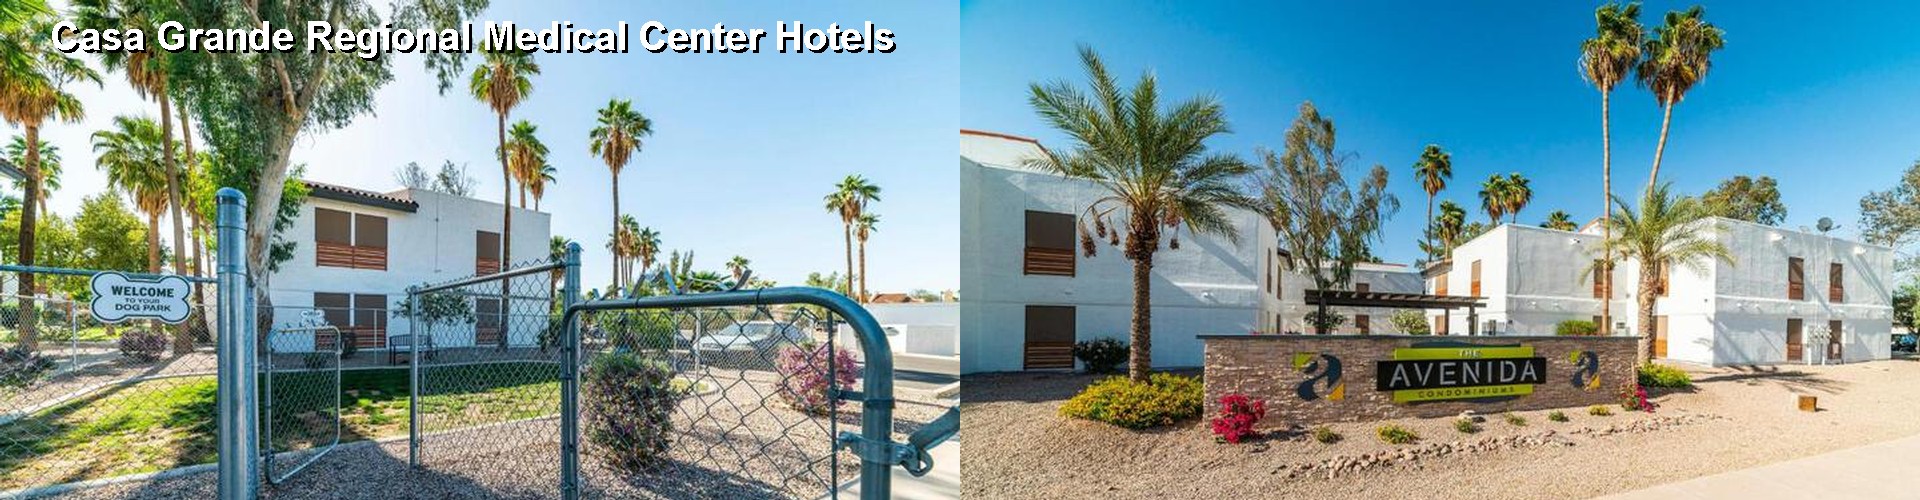 2 Best Hotels near Casa Grande Regional Medical Center